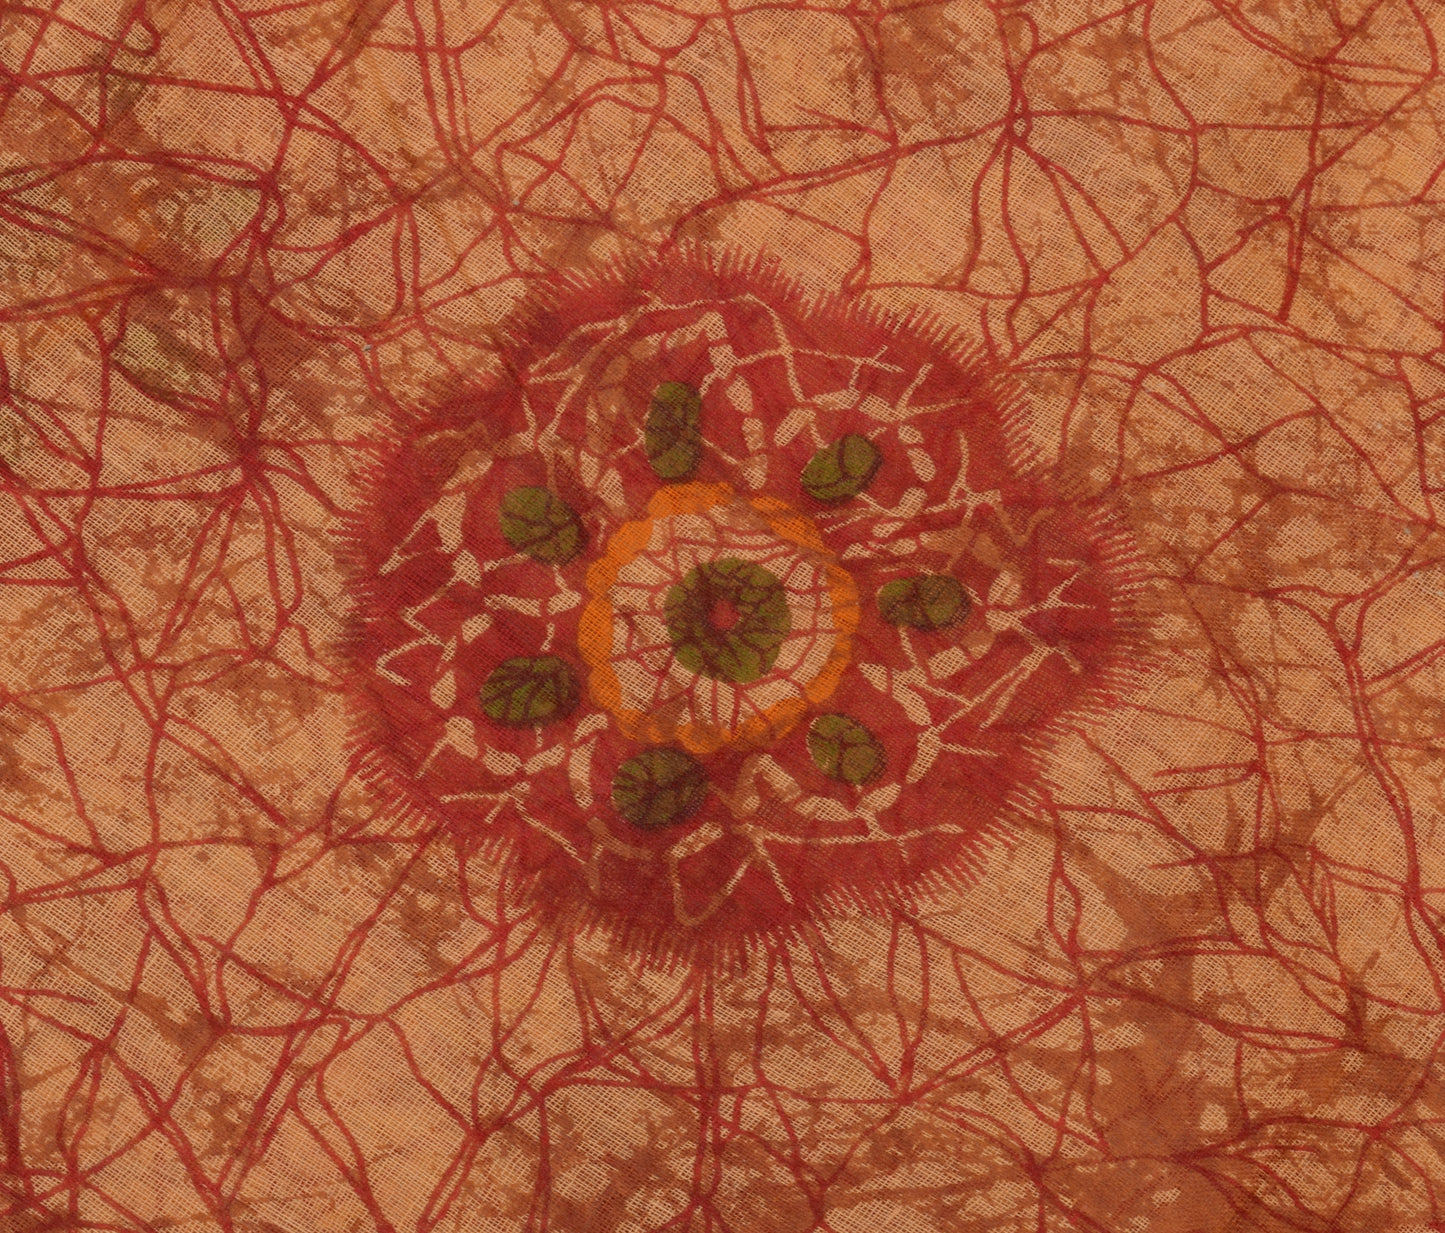 Sushila Vintage Indian Saree 100% Pure Cotton Printed 5 Yard Craft Sari Fabric